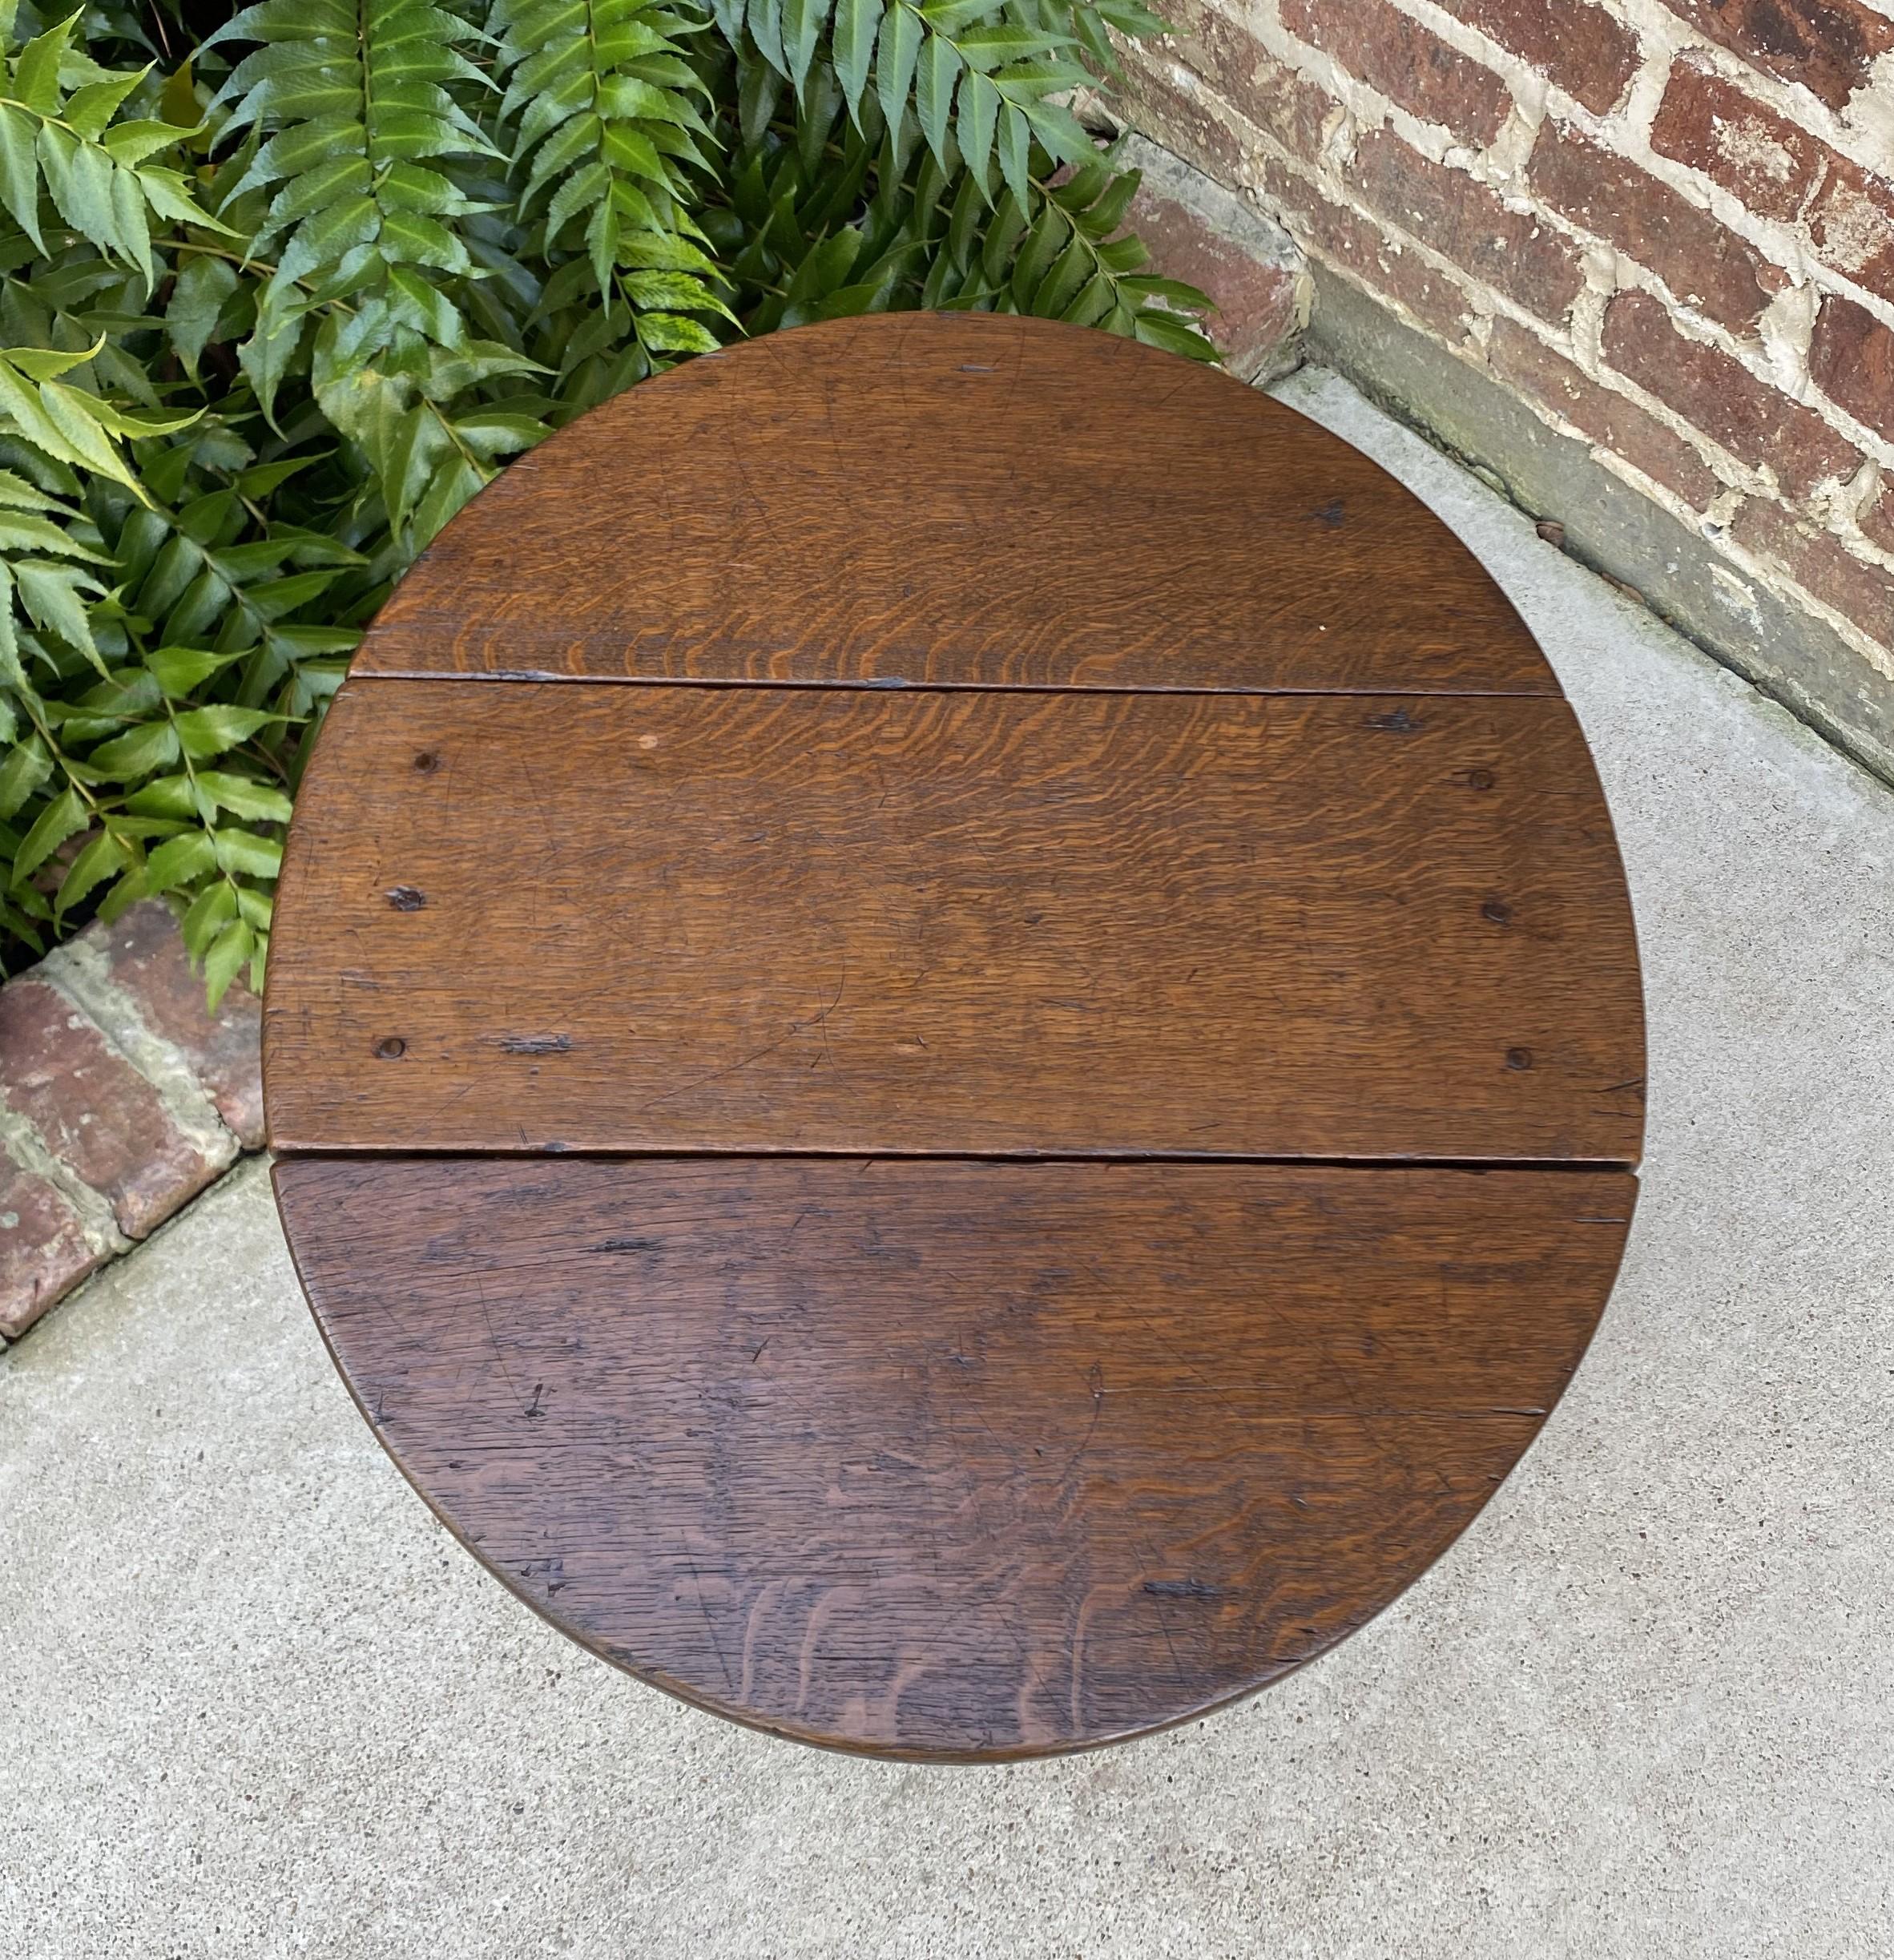 Carved Antique English Table Drop Leaf Trestle Base Petite Oak Pegged Oval End Table